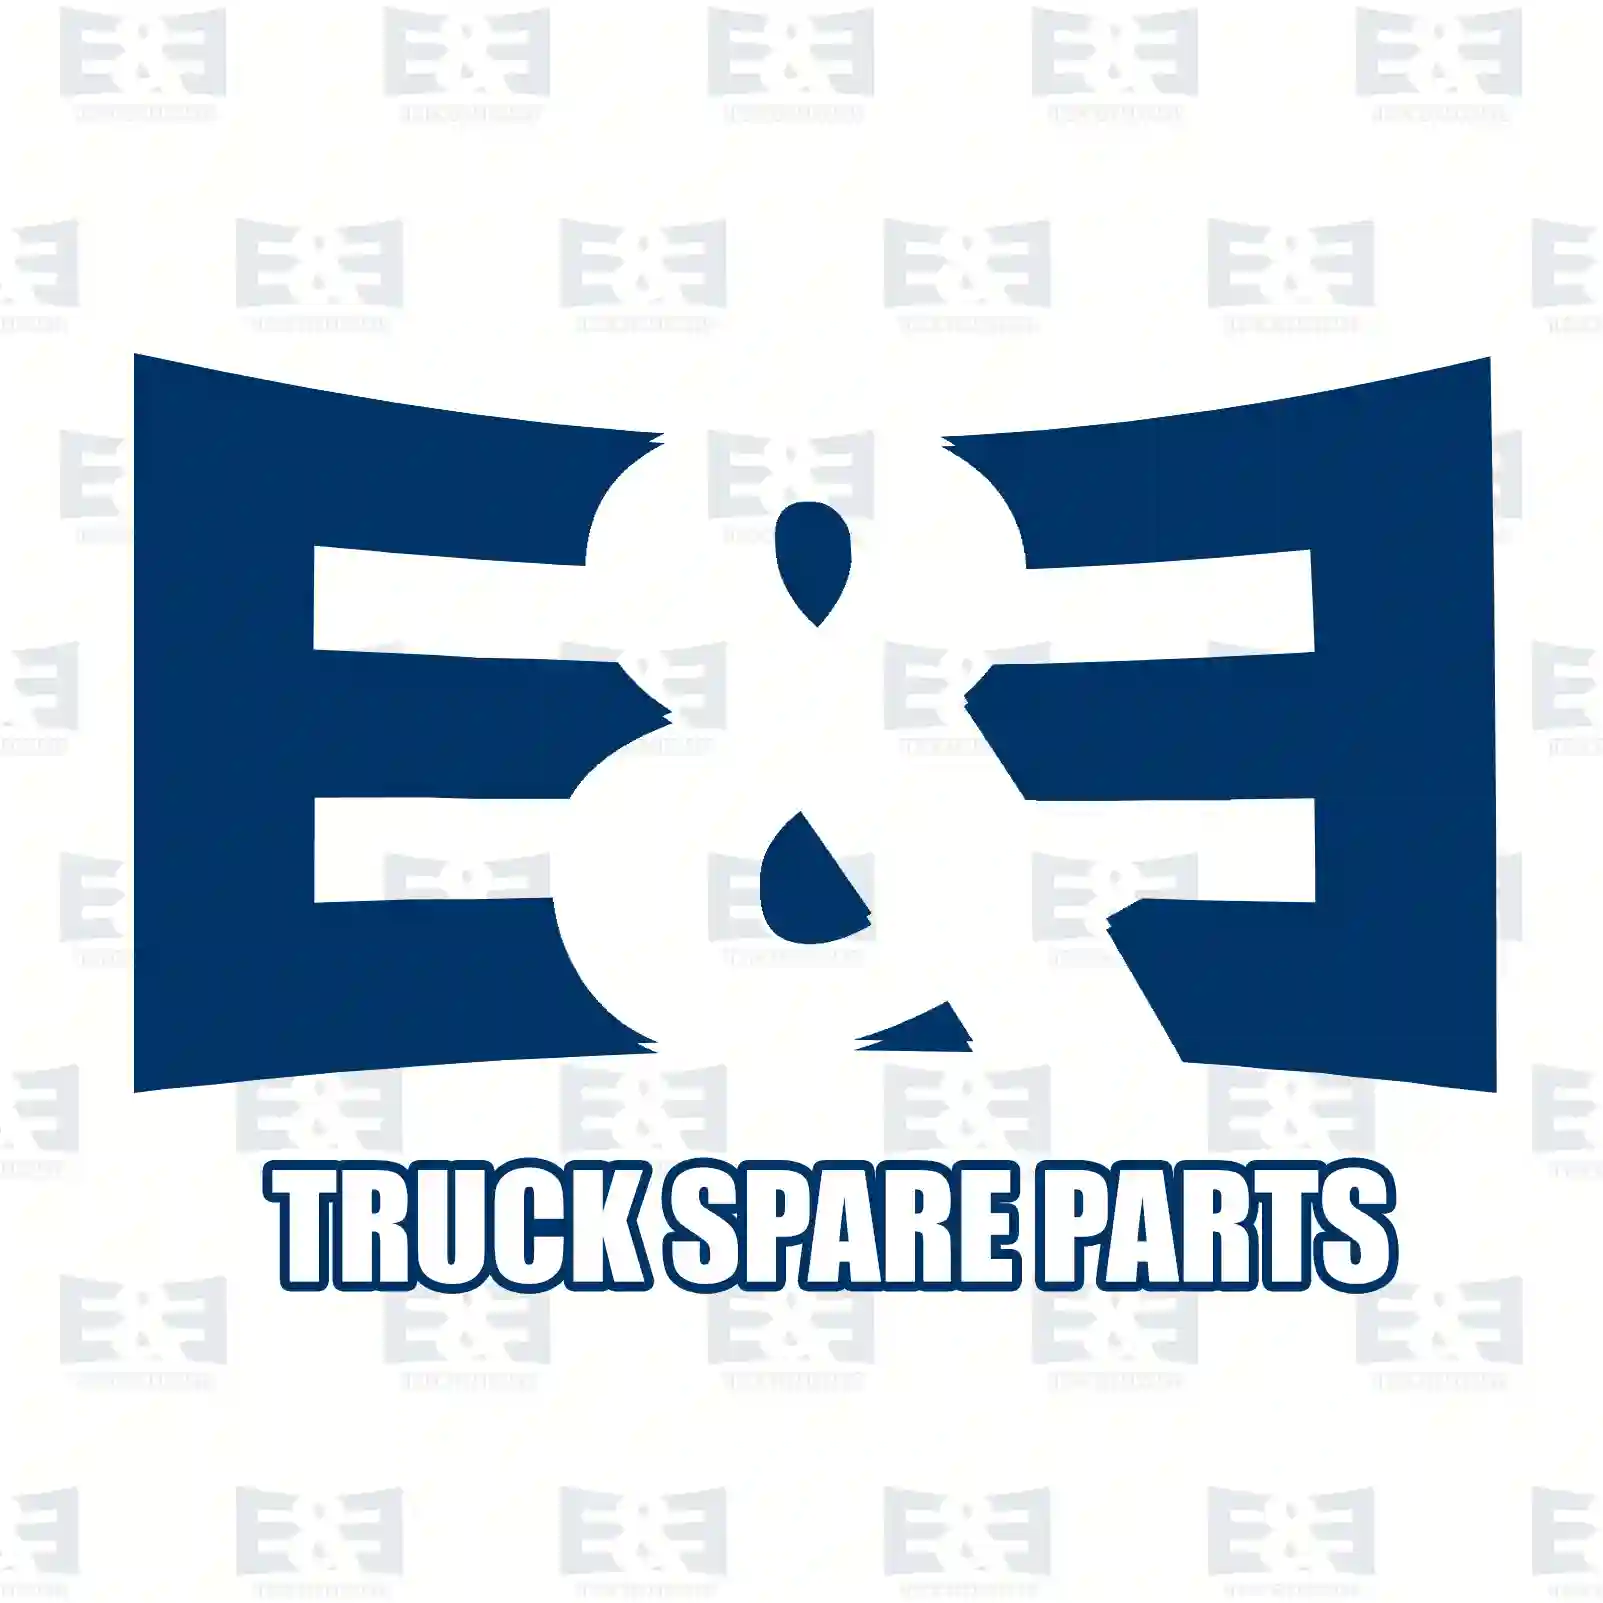 Ball joint, left hand thread, 2E2278287, 6313380310, , , , , ||  2E2278287 E&E Truck Spare Parts | Truck Spare Parts, Auotomotive Spare Parts Ball joint, left hand thread, 2E2278287, 6313380310, , , , , ||  2E2278287 E&E Truck Spare Parts | Truck Spare Parts, Auotomotive Spare Parts